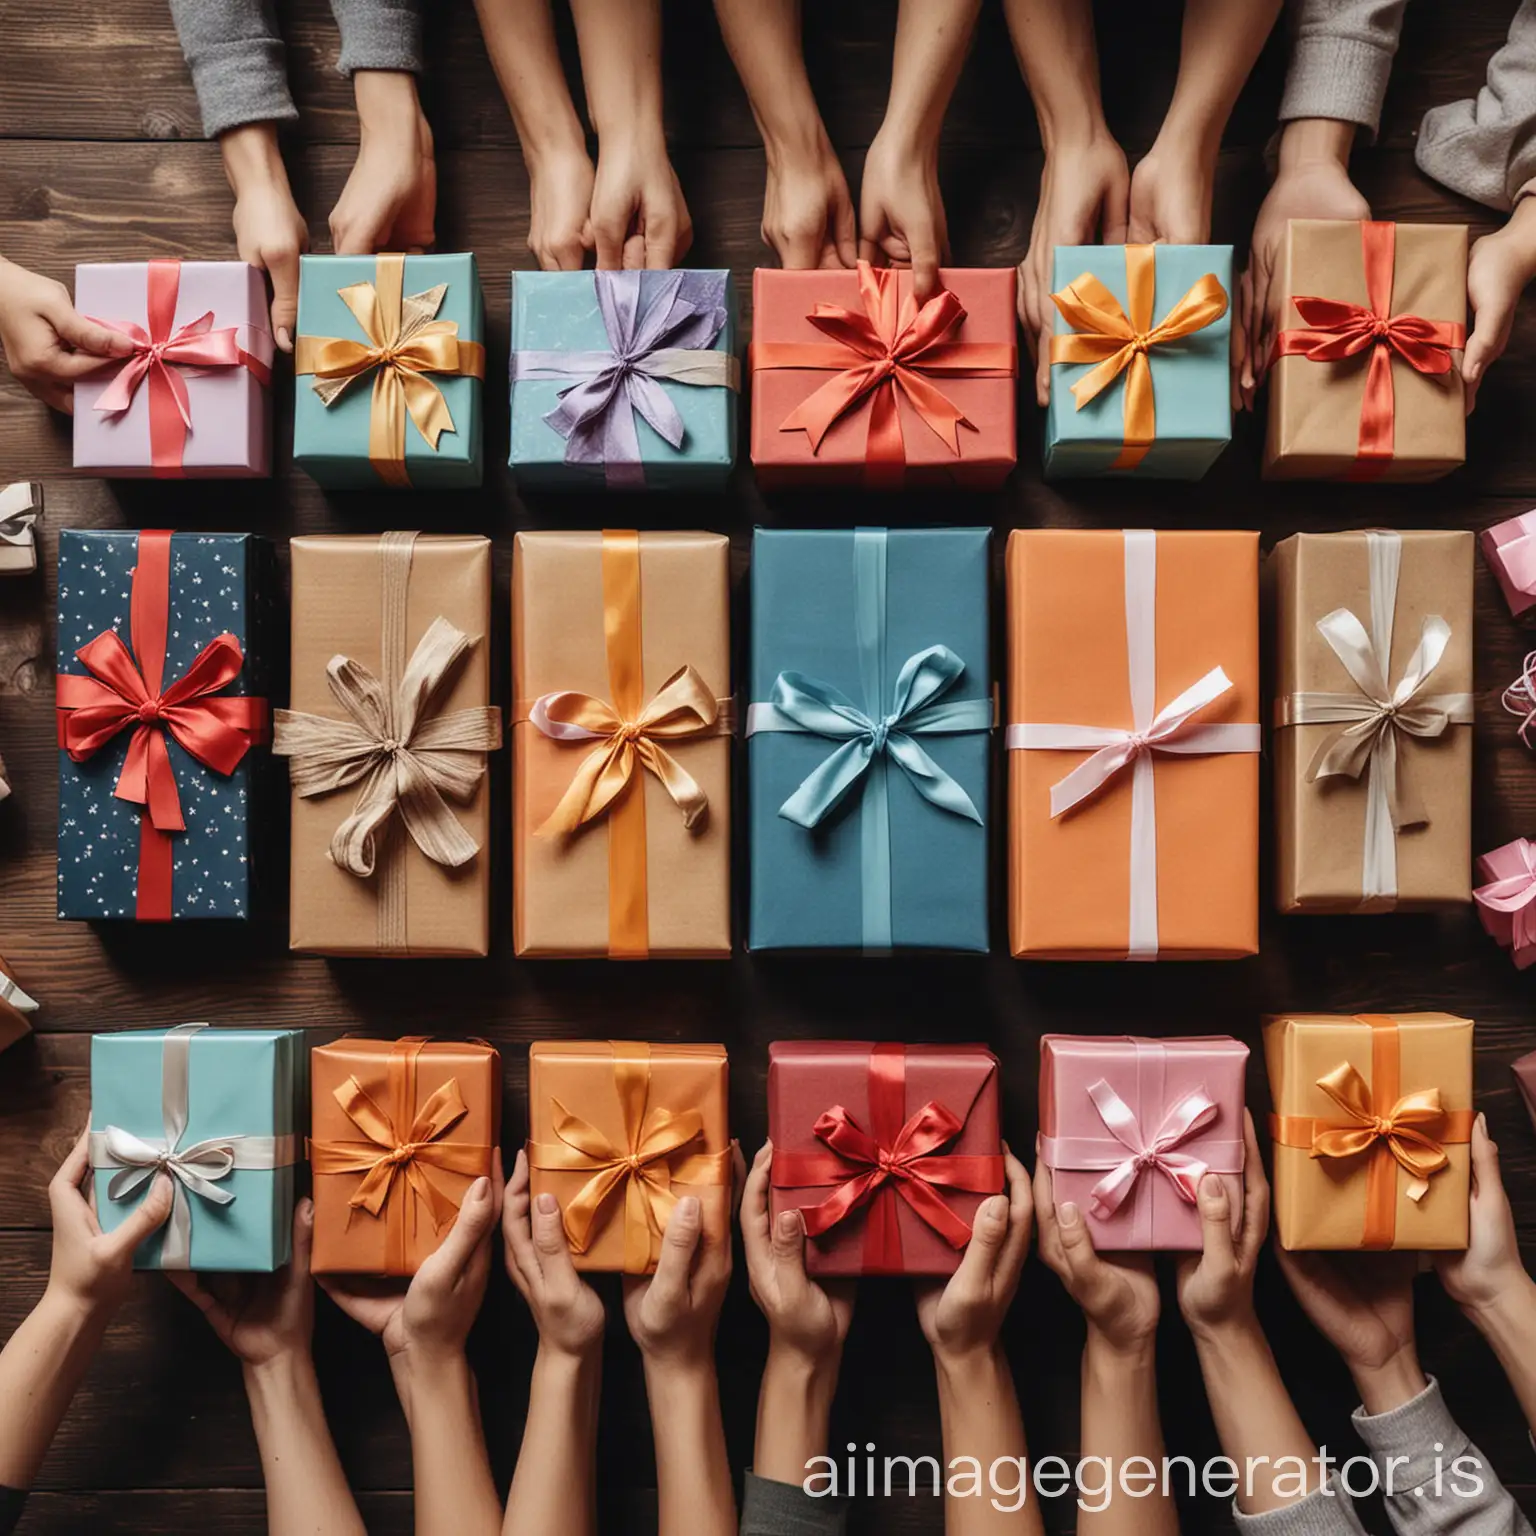 Creative-Gifts-Exchange-Joyful-Moments-of-Giving-and-Receiving